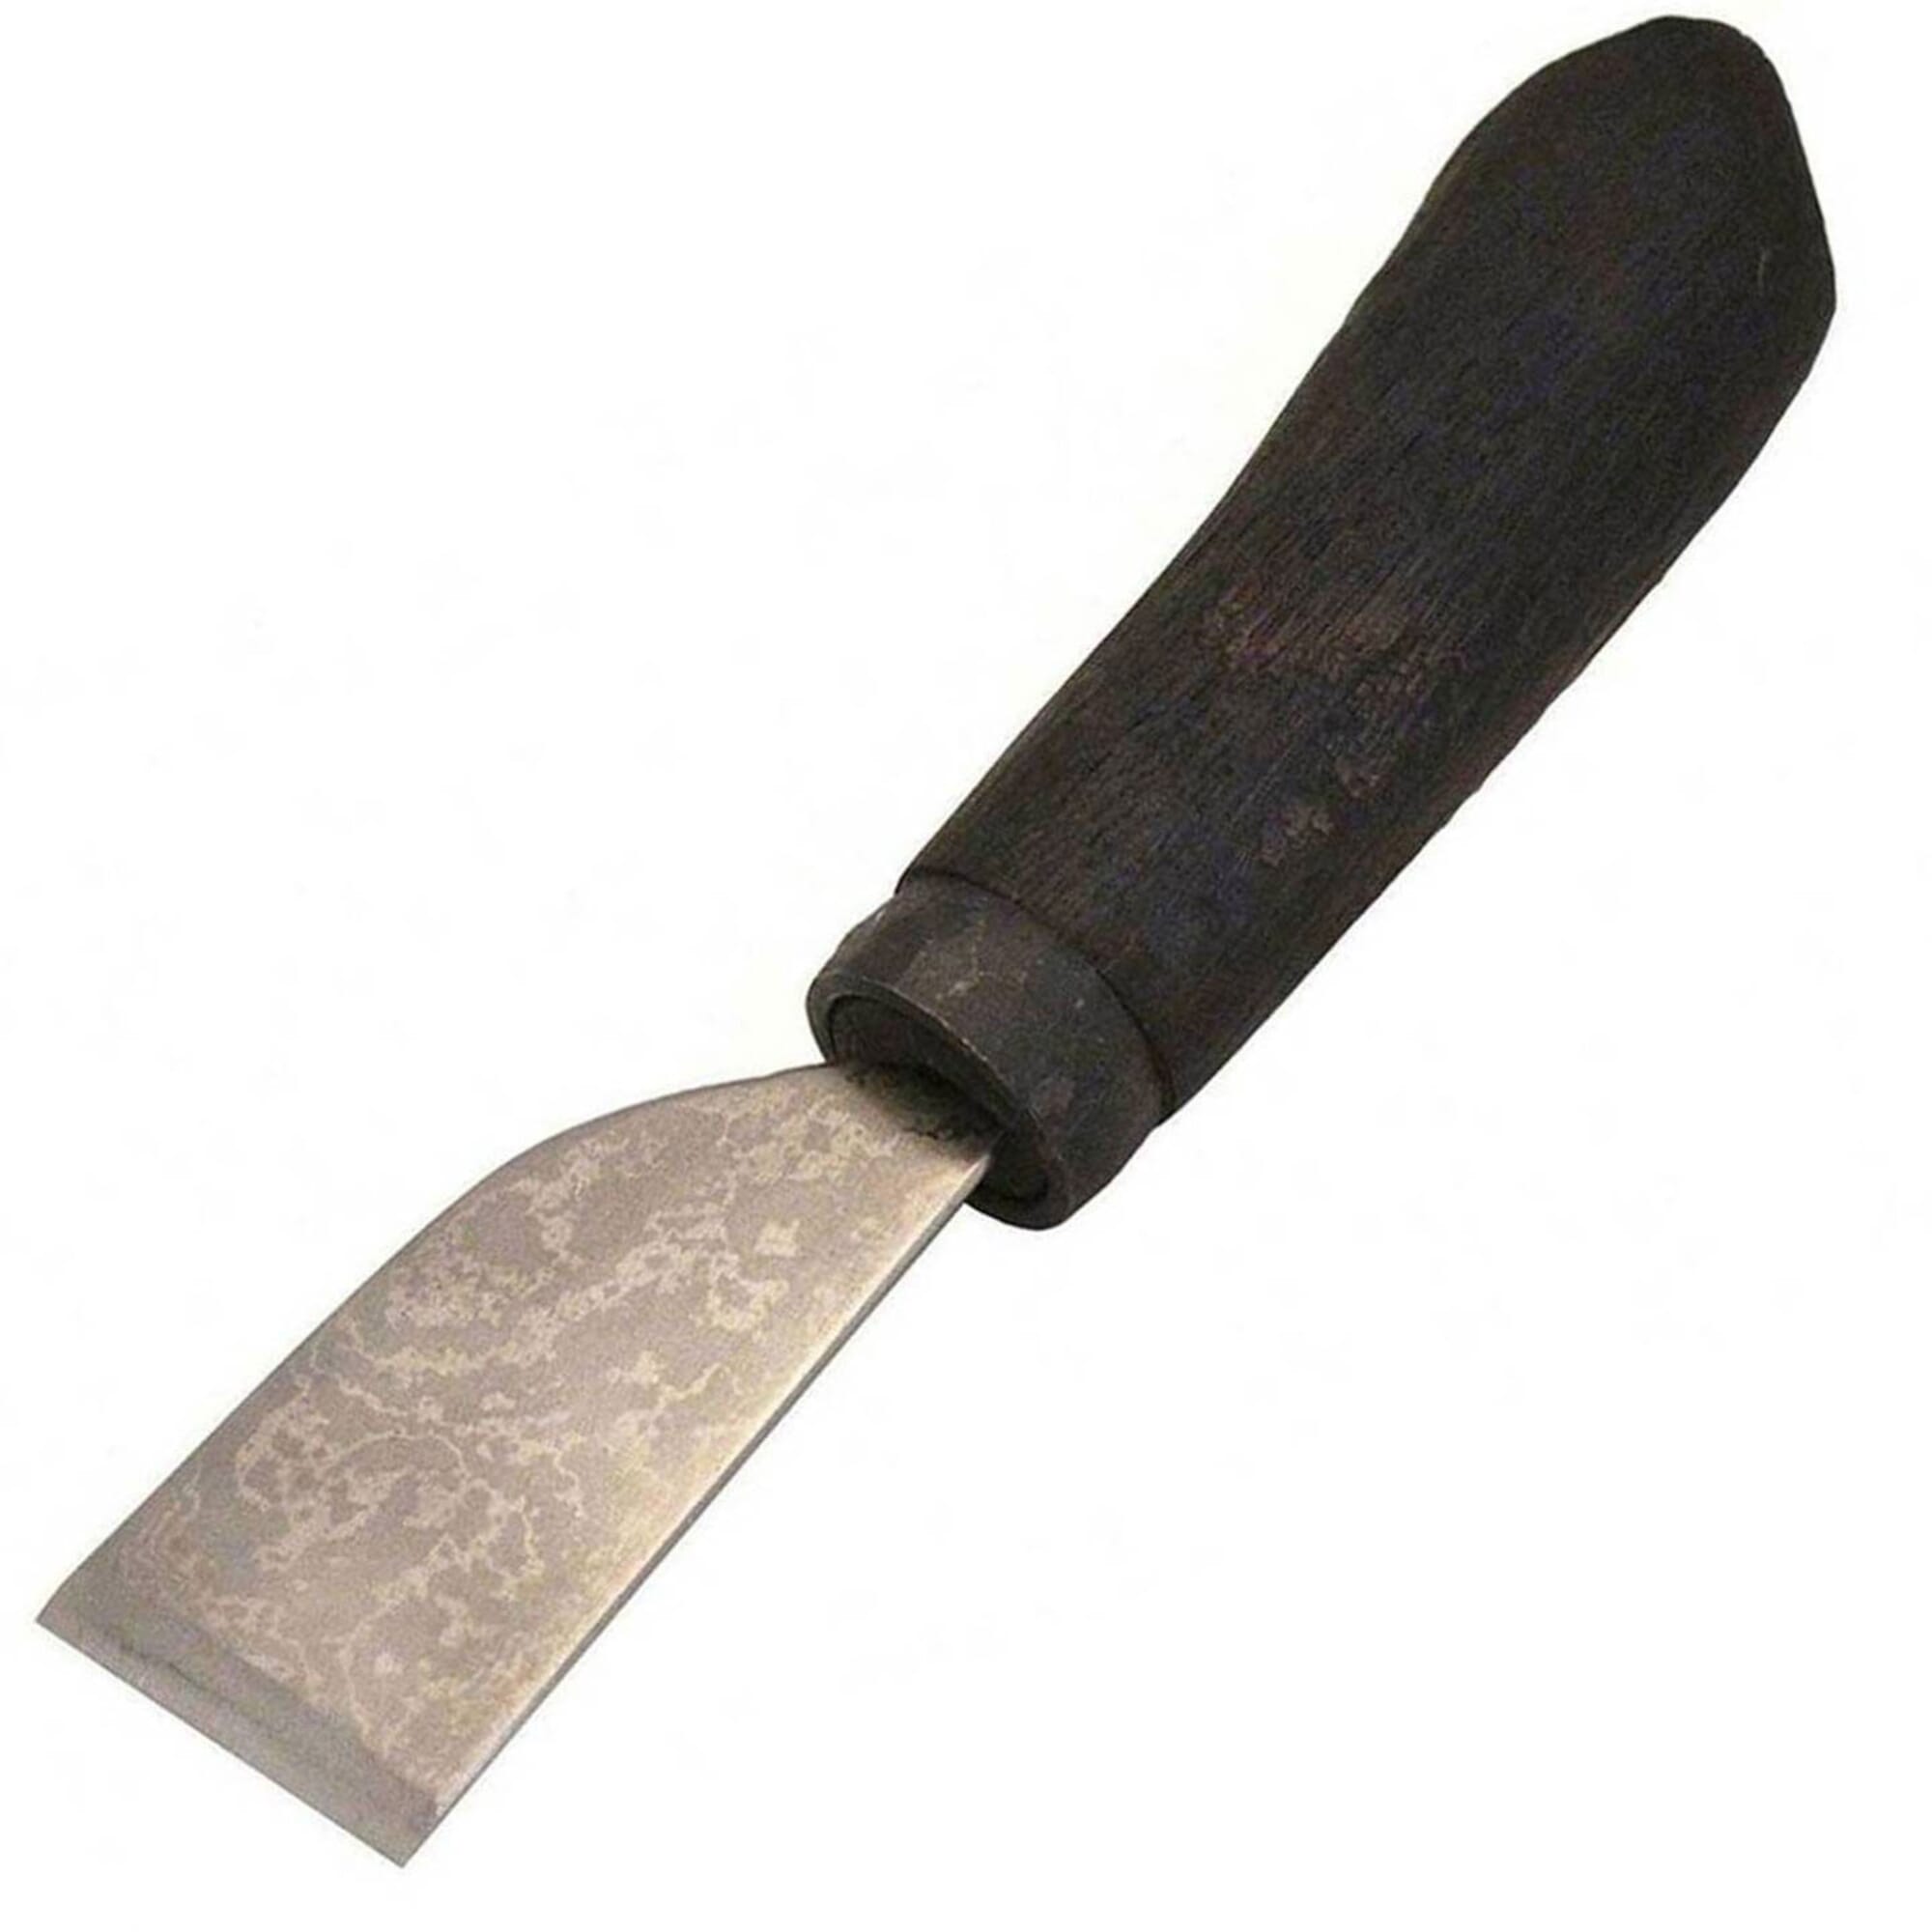 Homemade skiving knife : r/Leathercraft